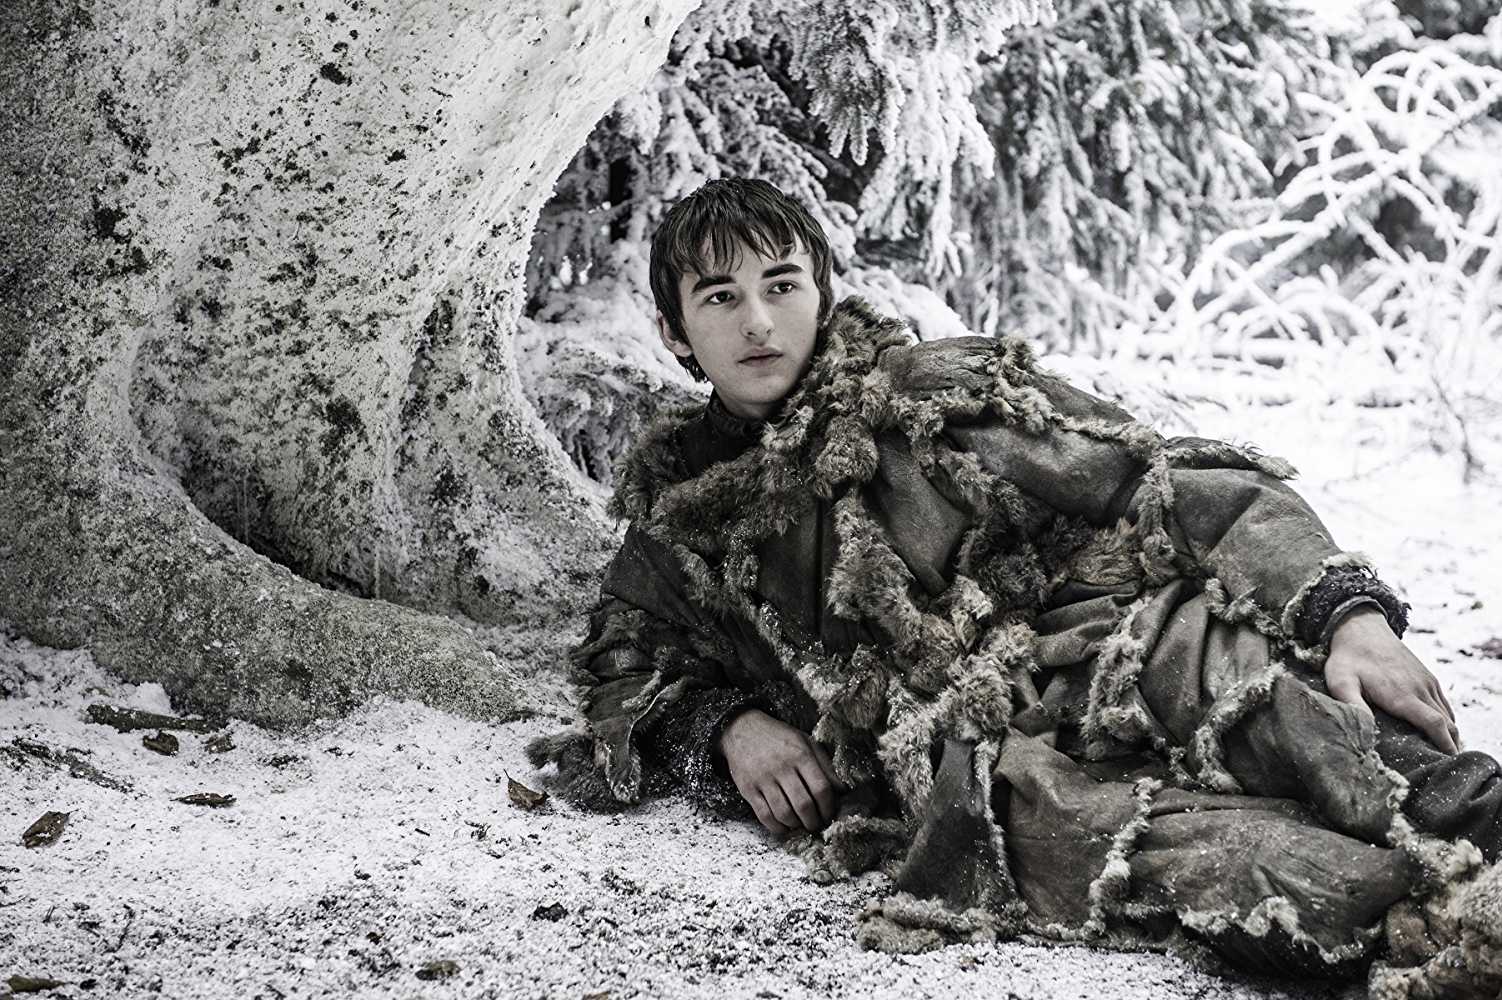 Issac Hempstead Wright as Bran Stark in 'Game of Thrones'.
(Source: IMDB)